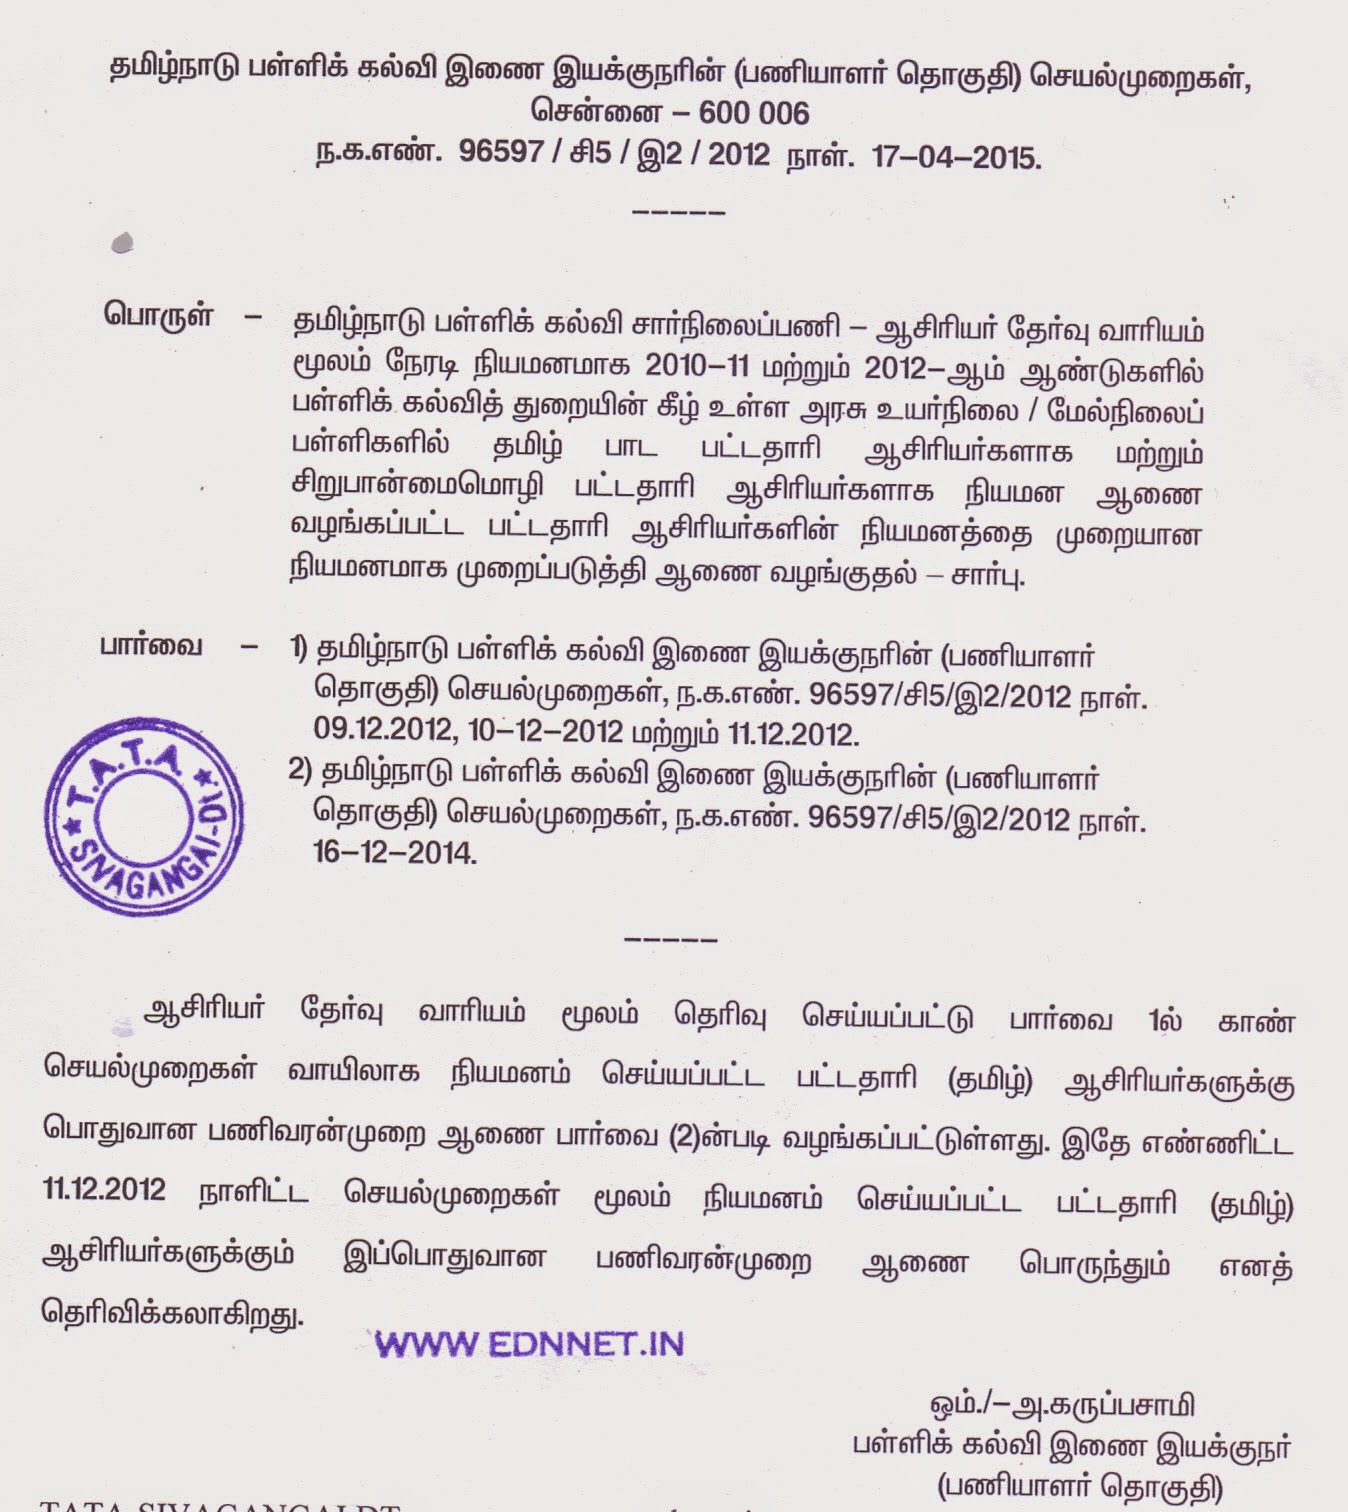 Invitation Letter Format In Tamil Images - Invitation 